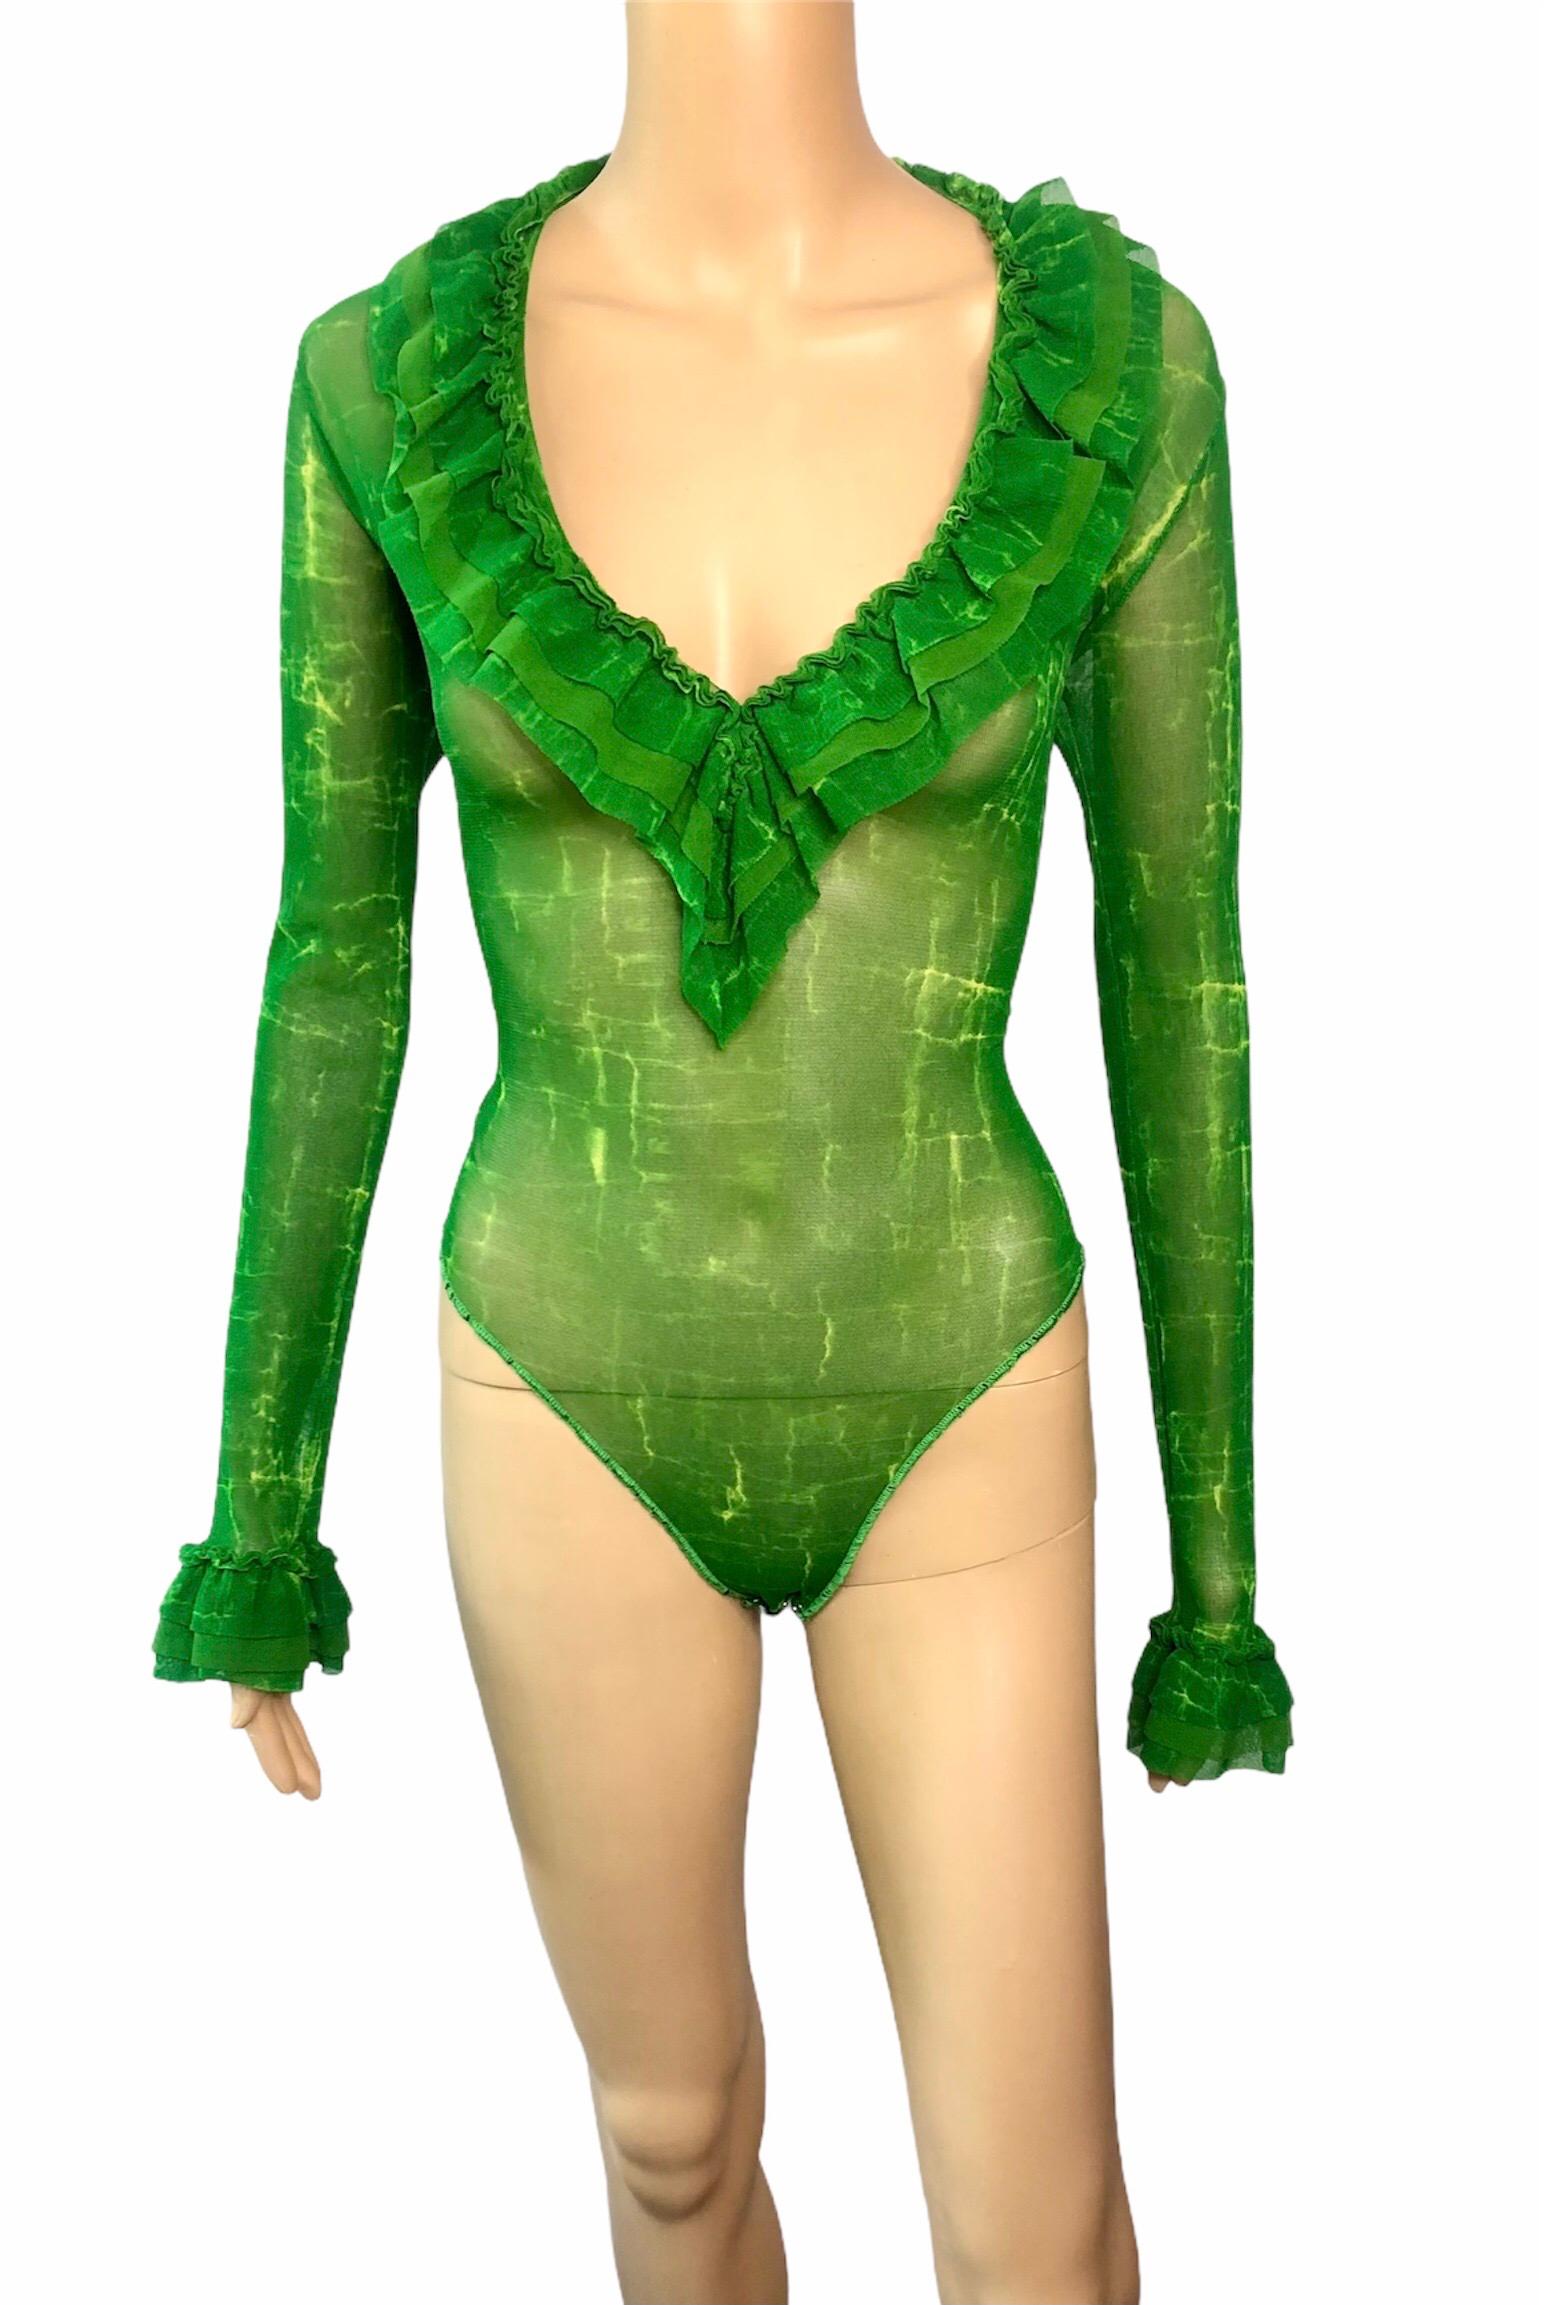 green leotard costume